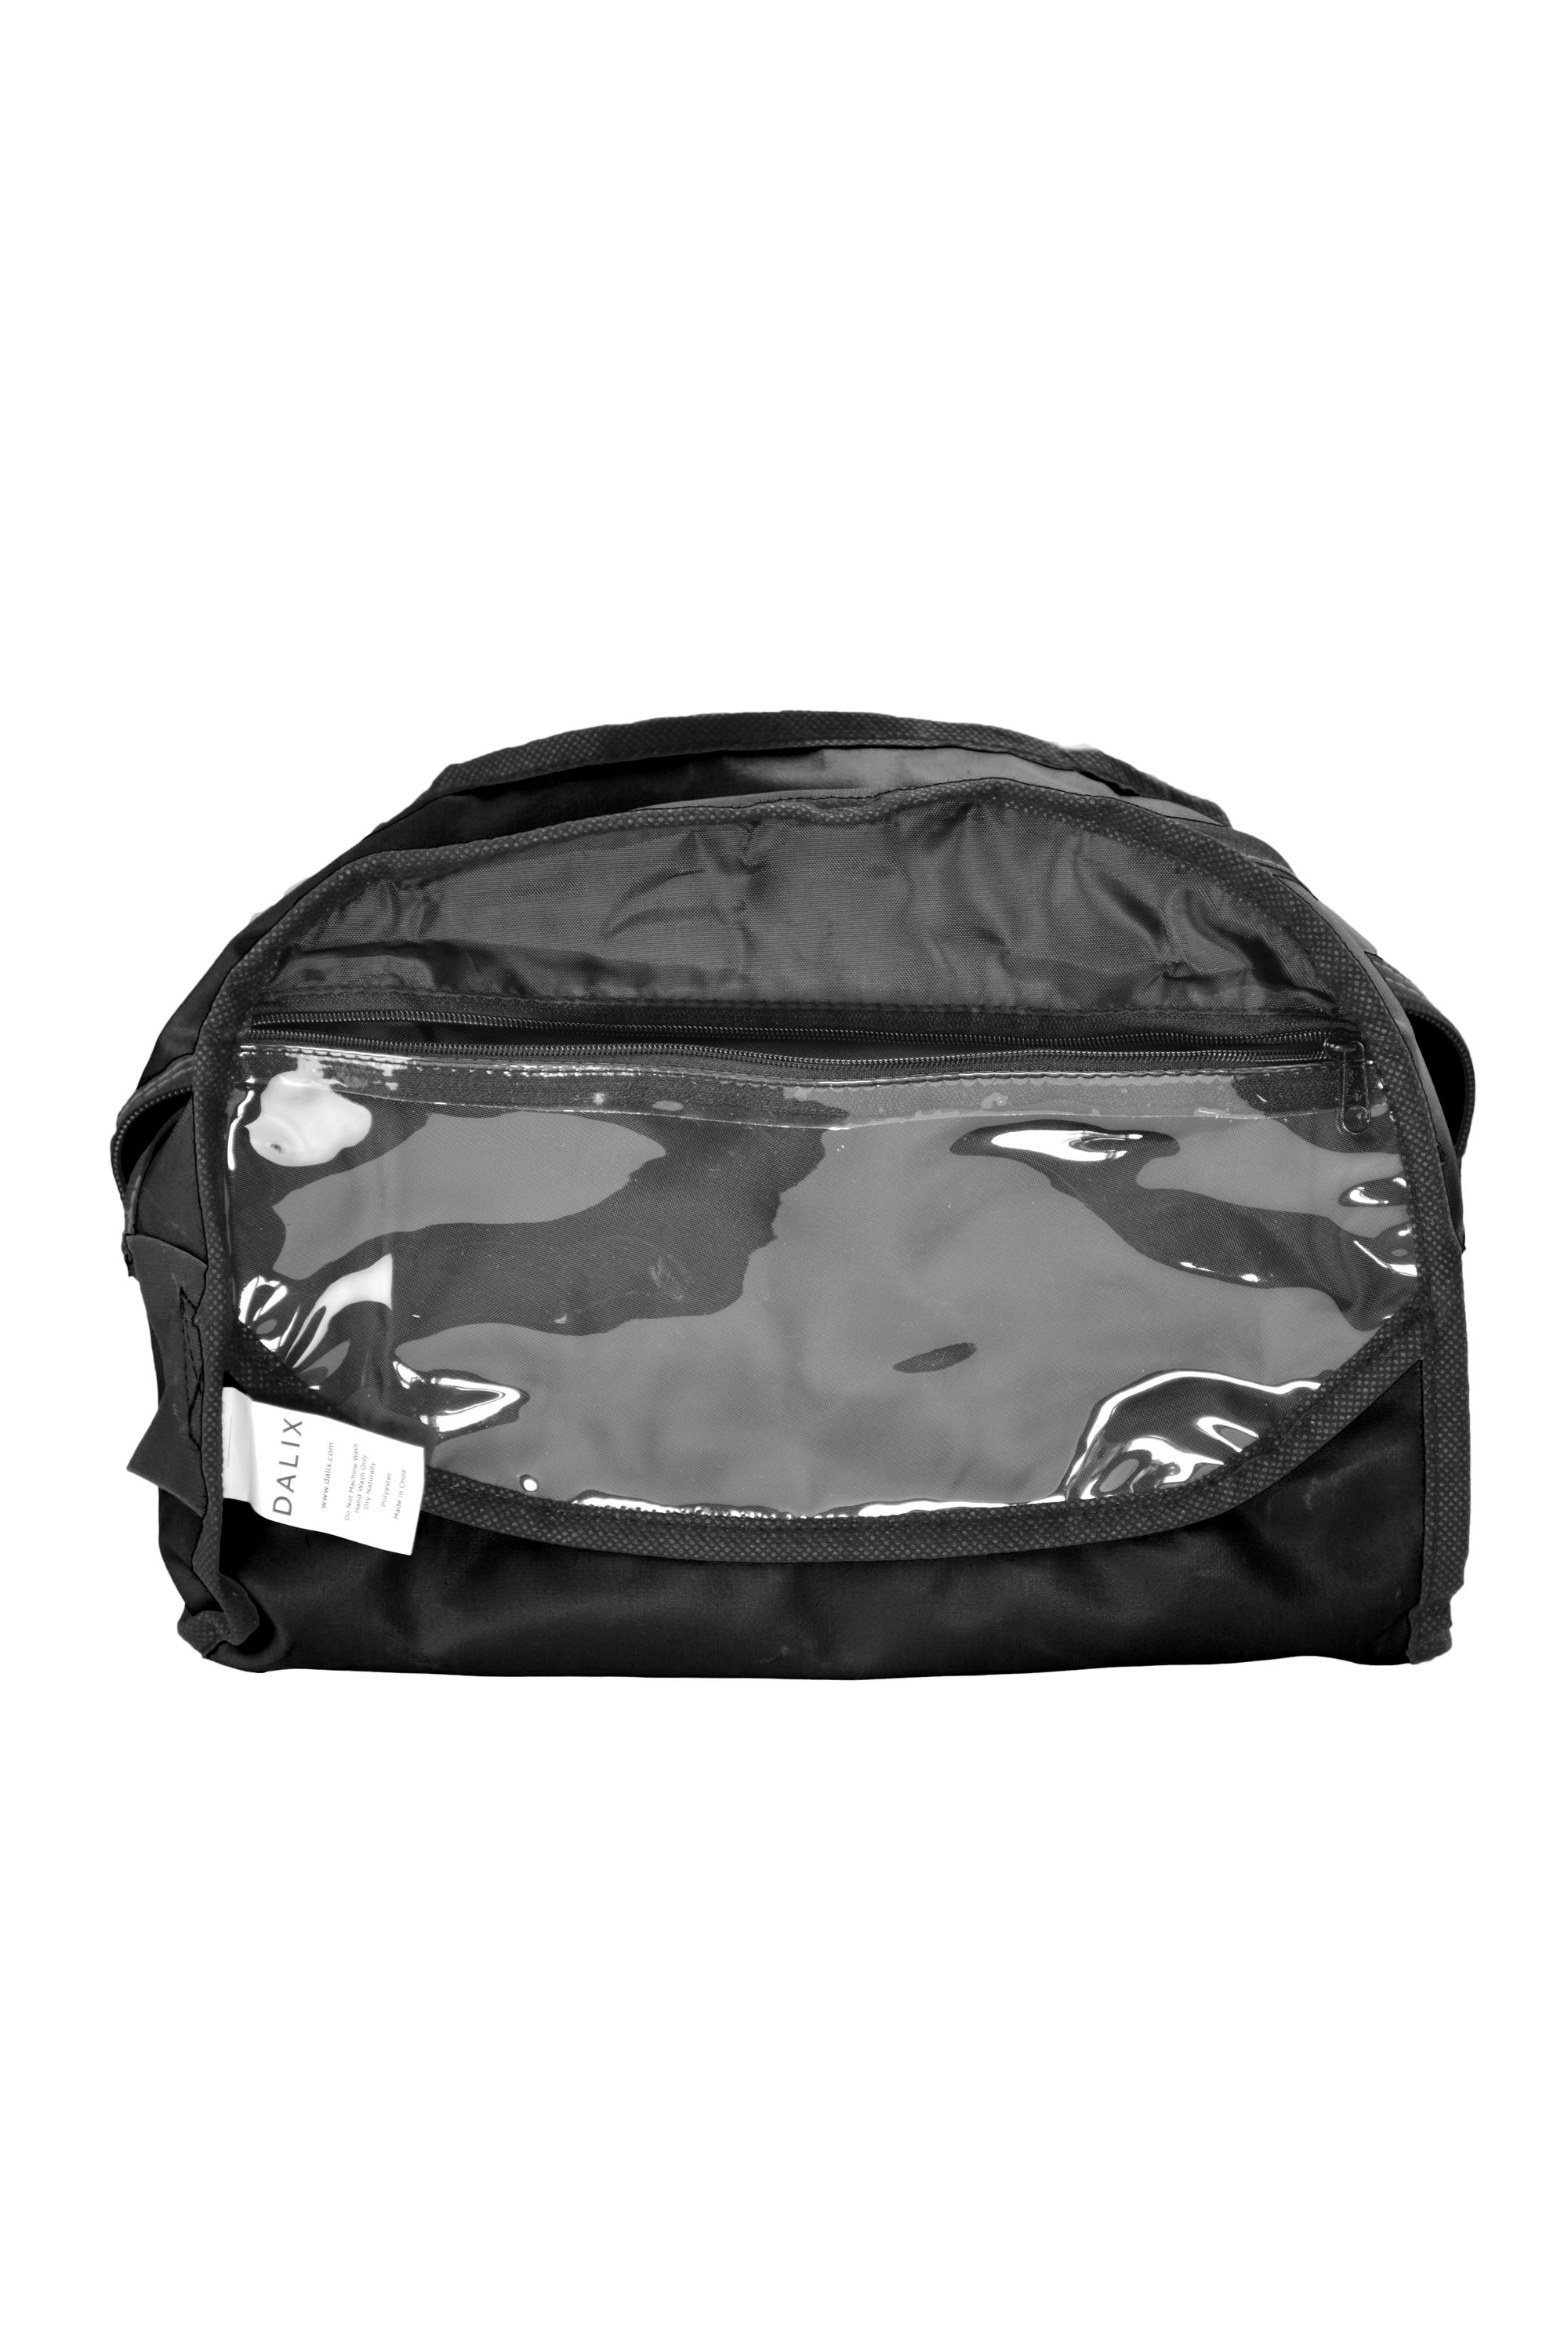 DALIX 12" Mini Duffel Bag Gym Duffle in Black - image 2 of 8